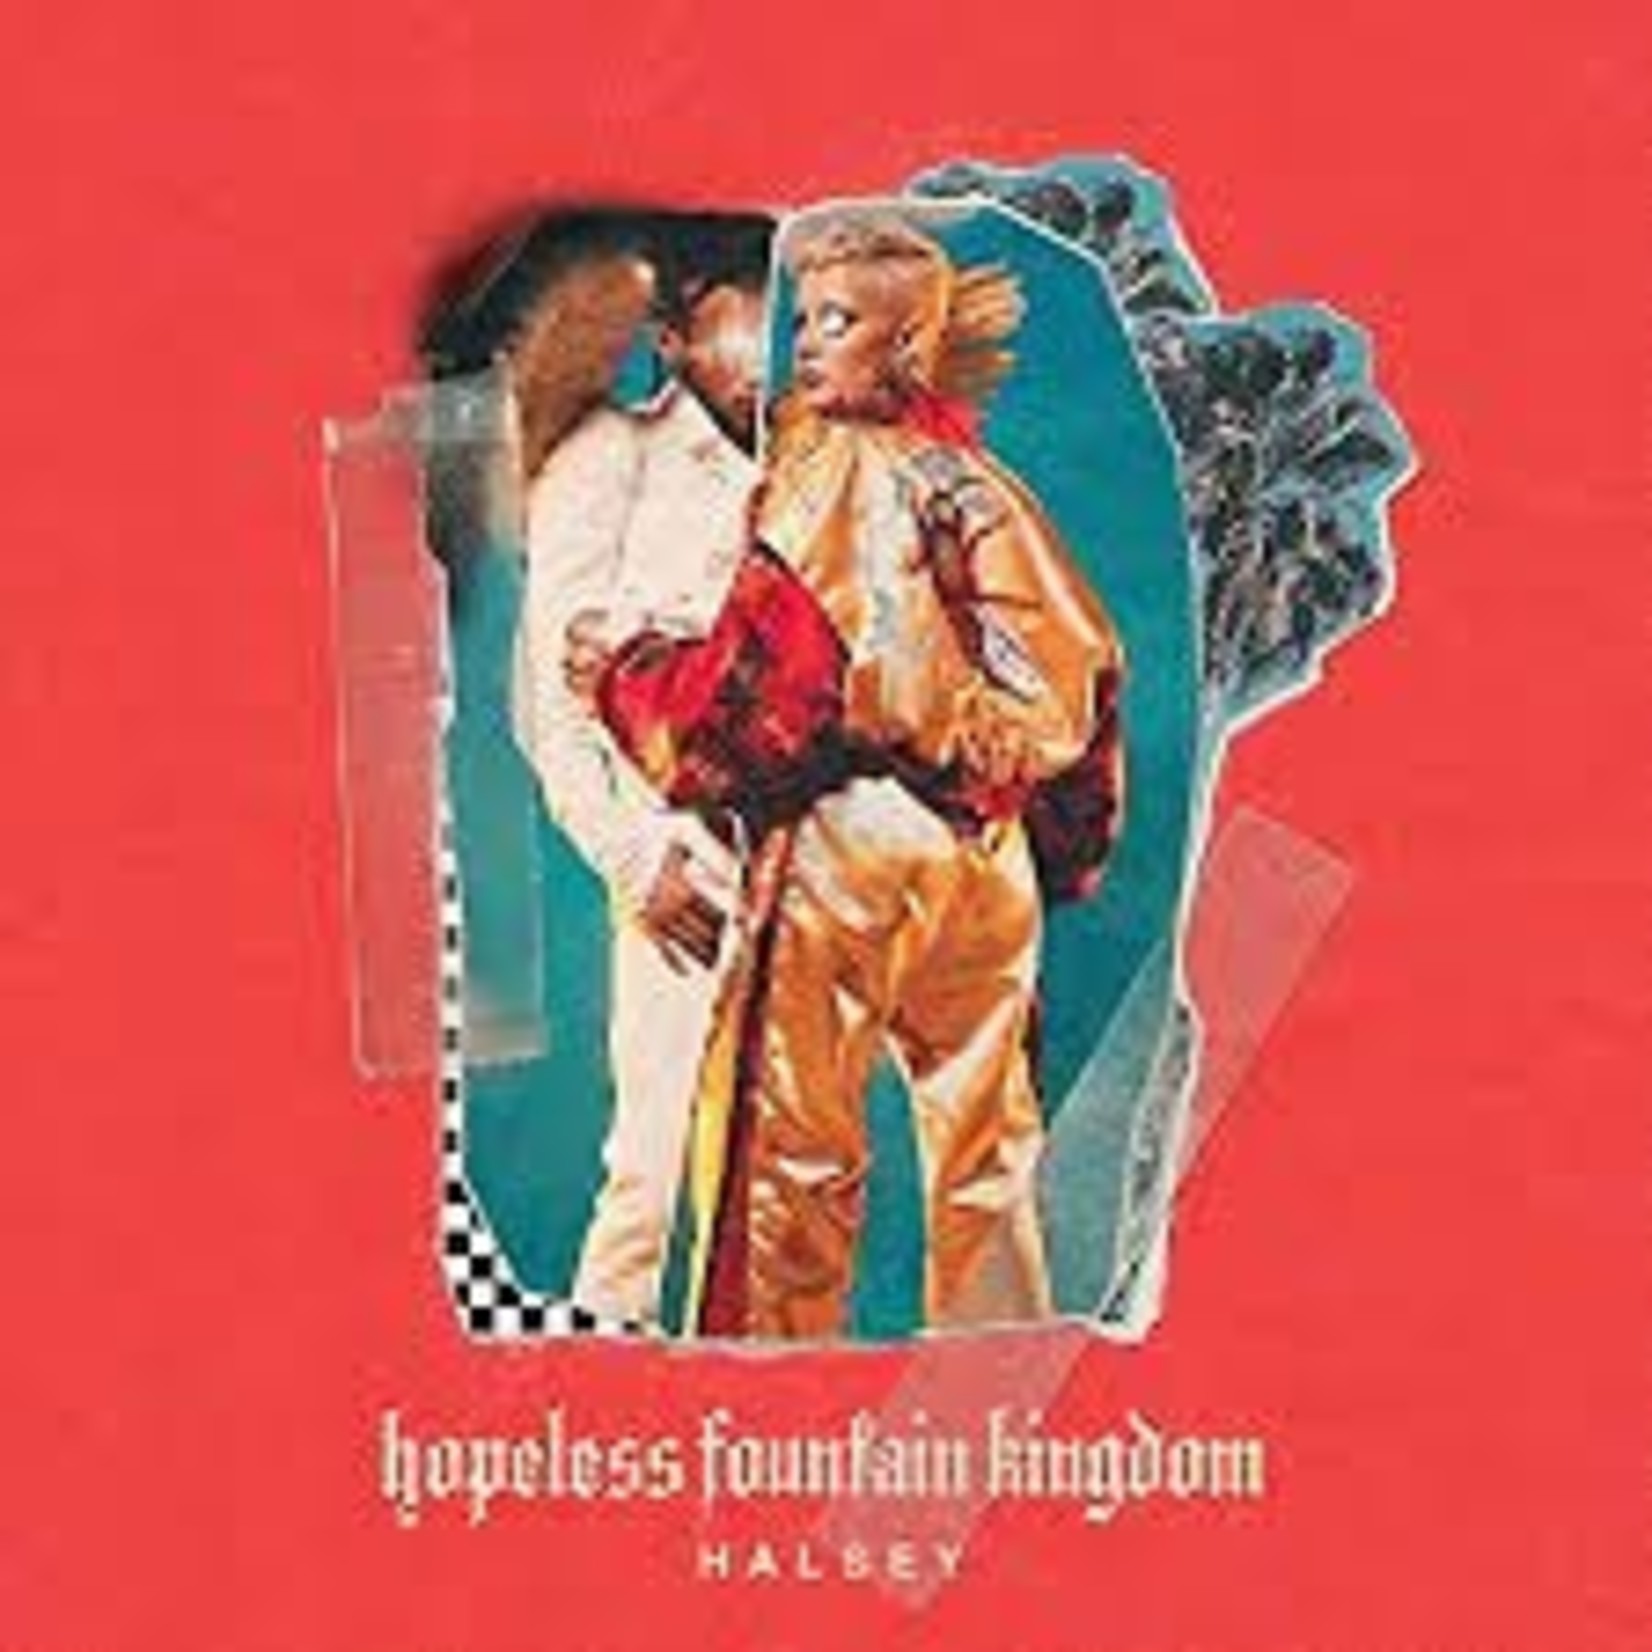 HALSEY - HOPELESS FOUNTAIN KINGDOM  - LP